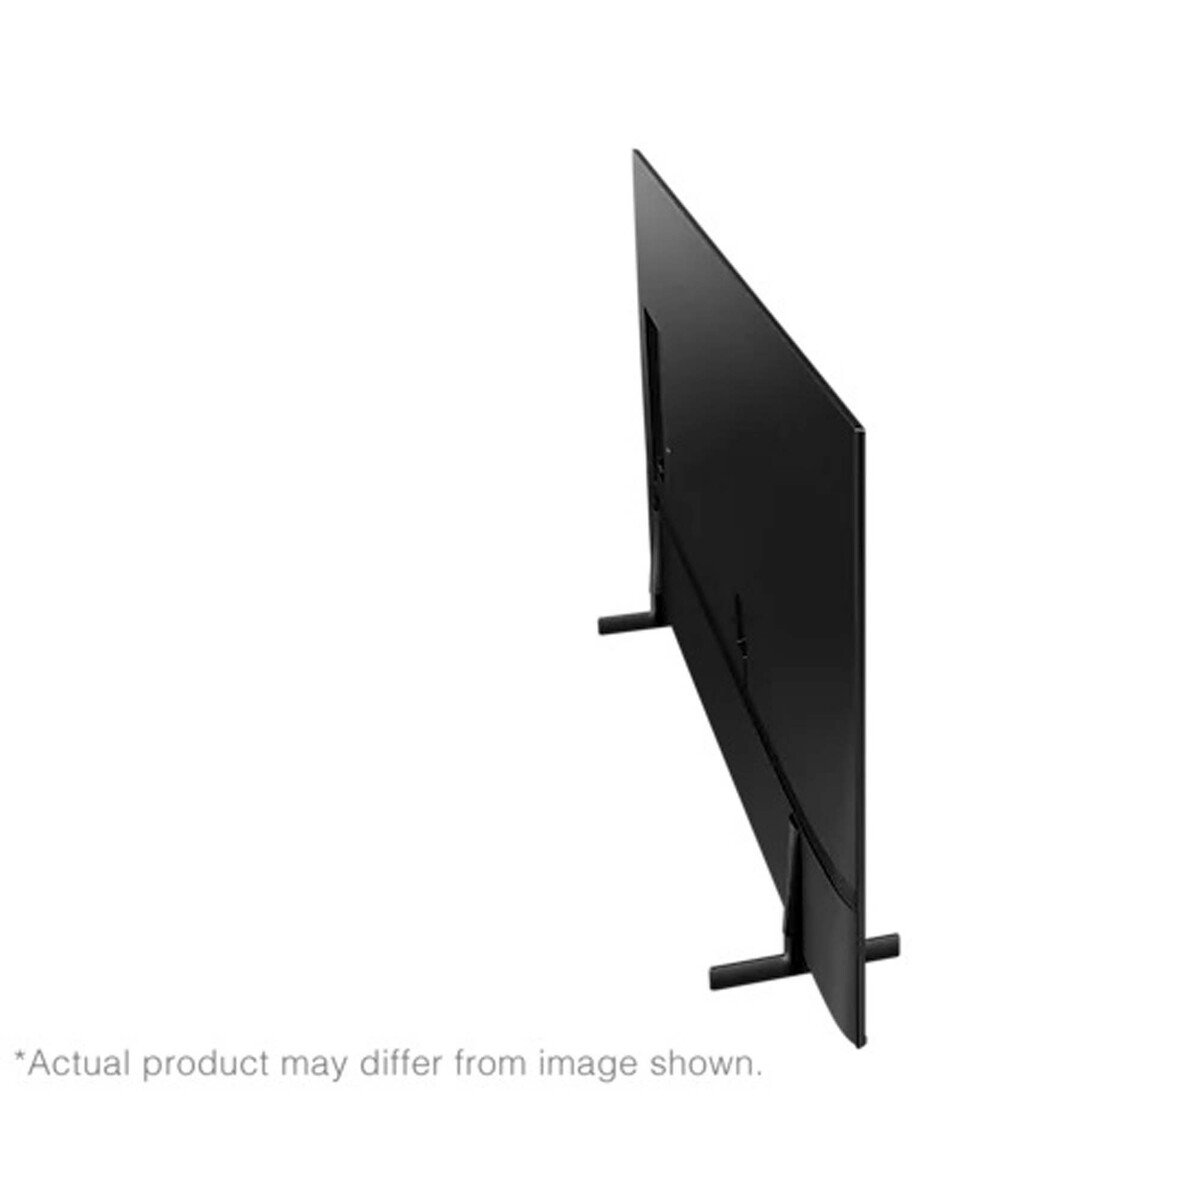 Samsung 43 inches 4K UHD Smart LED TV, Black, UA43AU8000UXZN